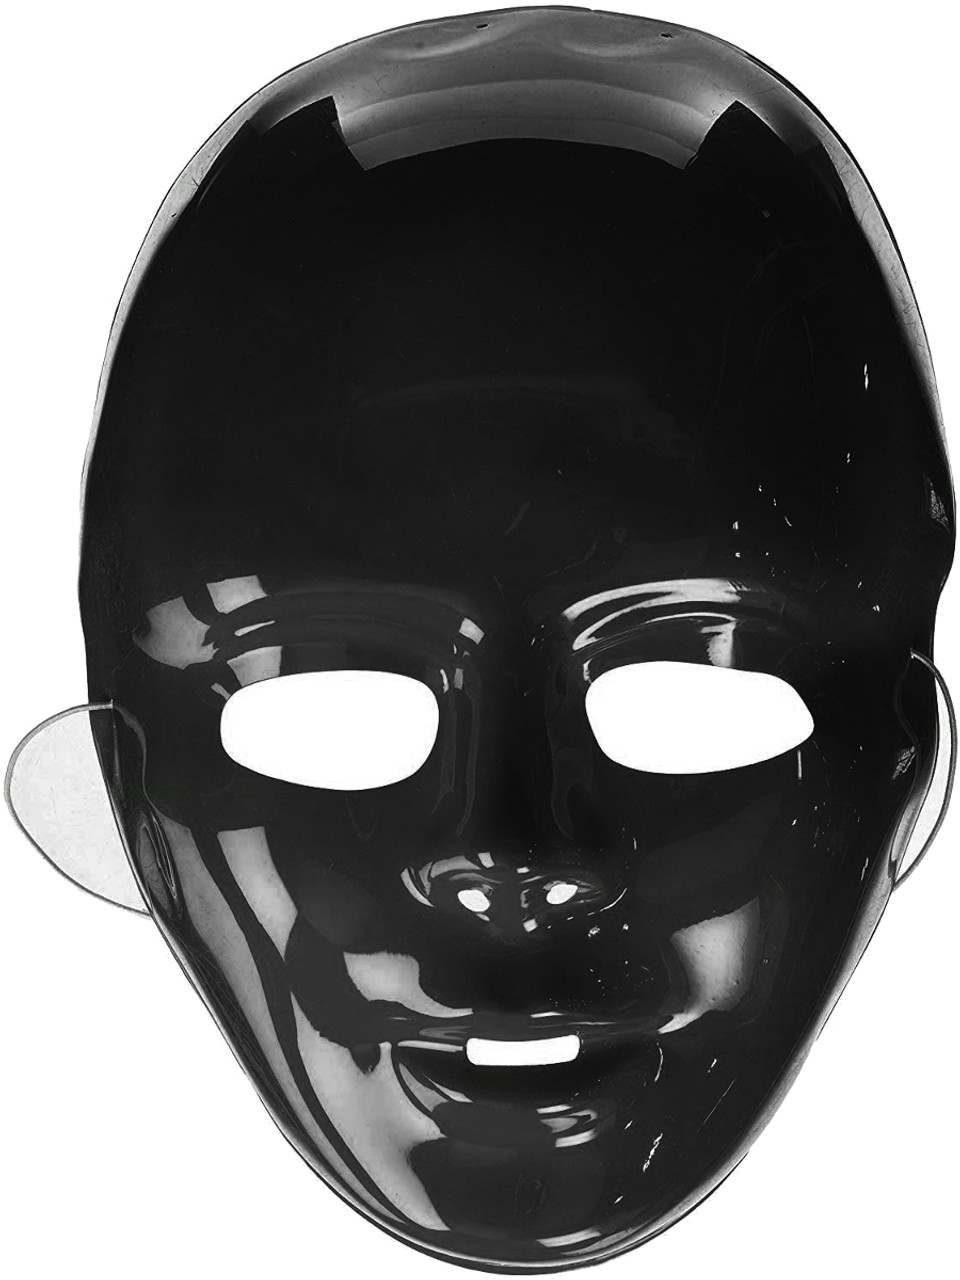 Blank Black Costume Mask